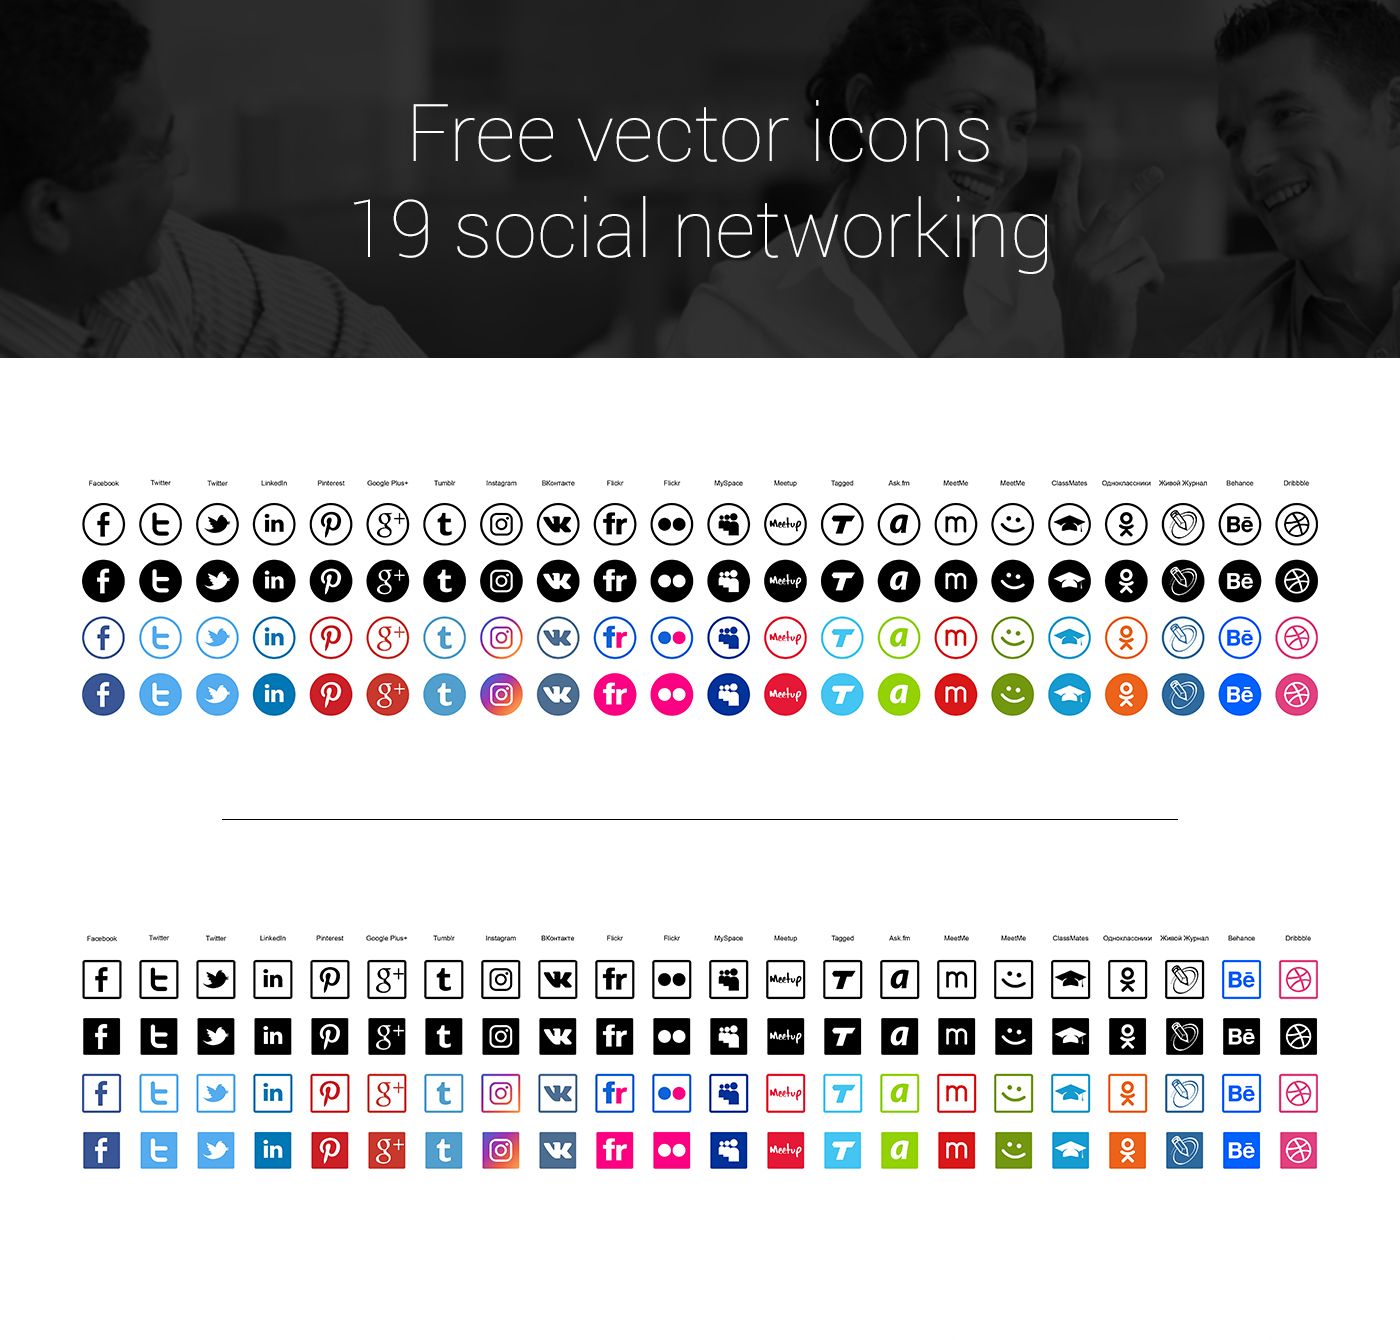 free freebie free vector icons Social Networking facebook twitter Linkedin Google Plus+ instagram download